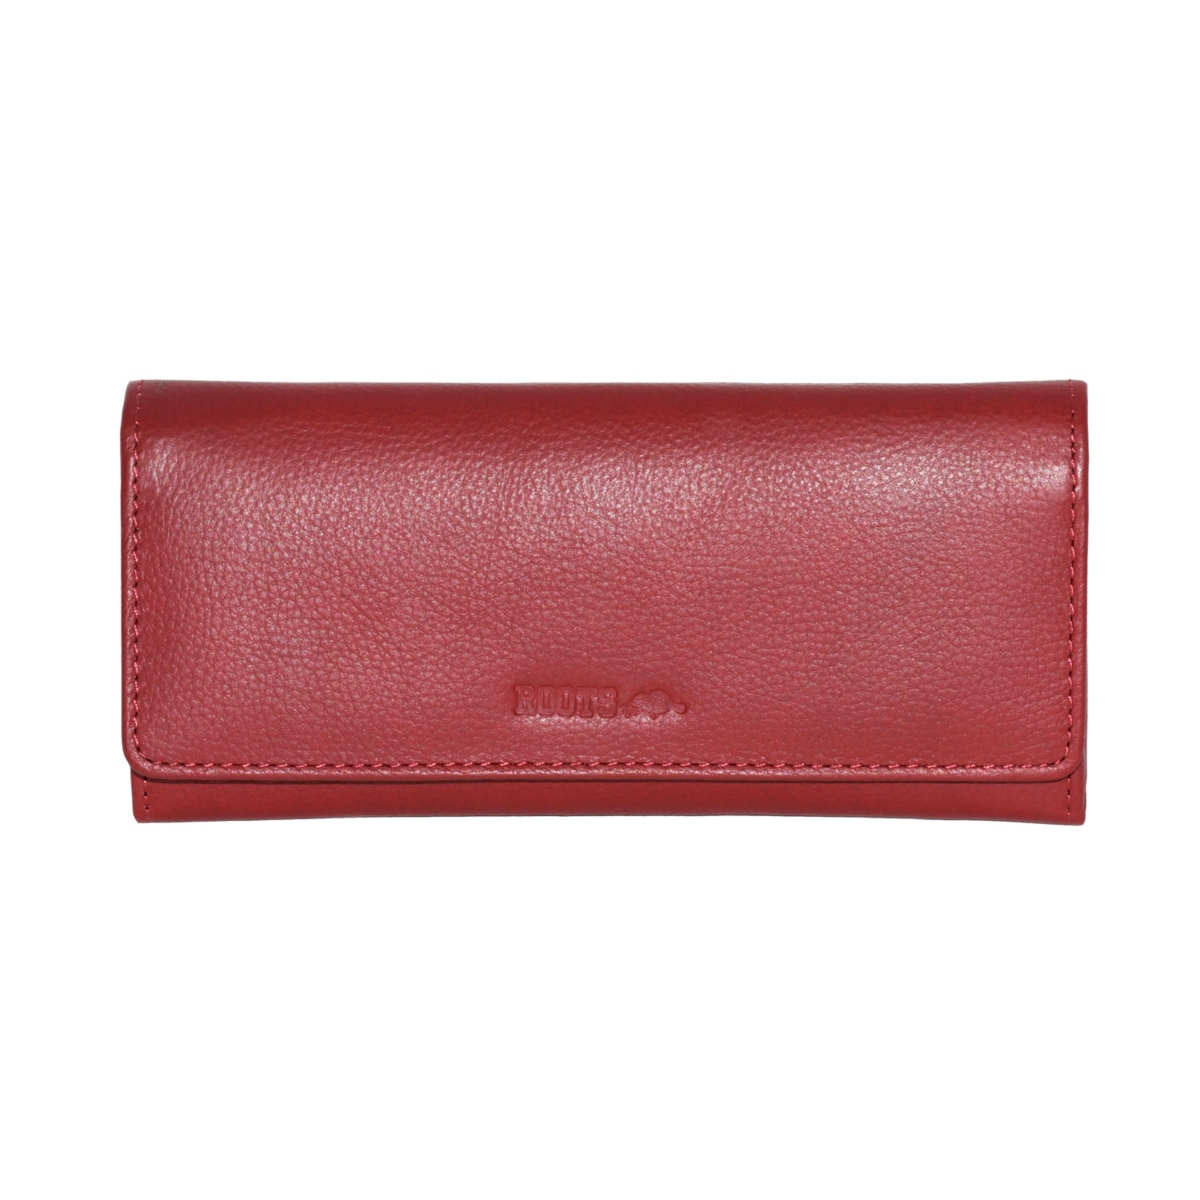 Ladies Slim Leather Clutch Wallet - Red